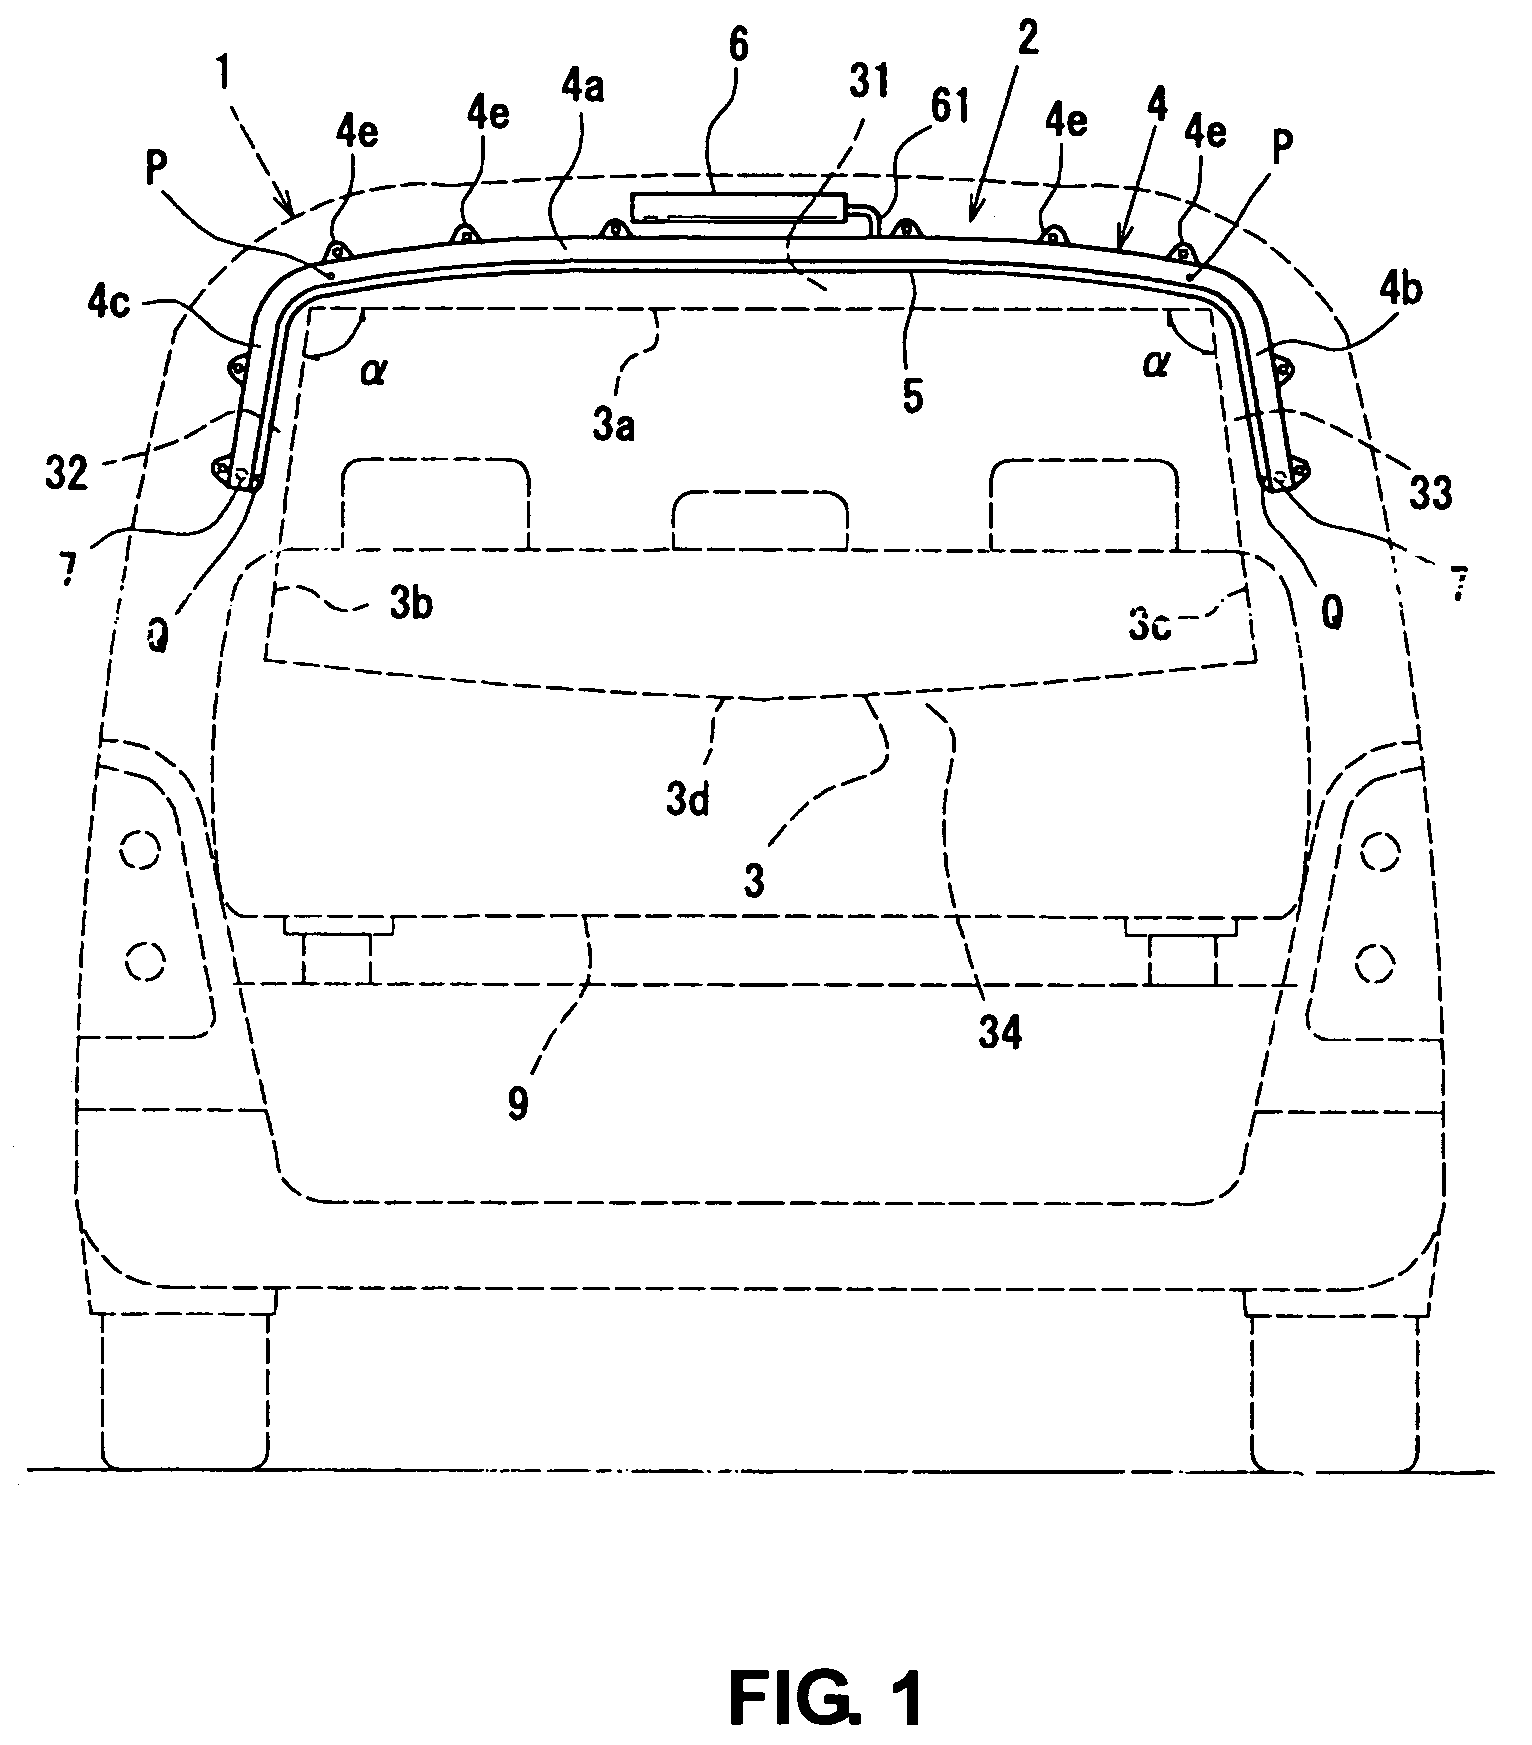 Curtain airbag device